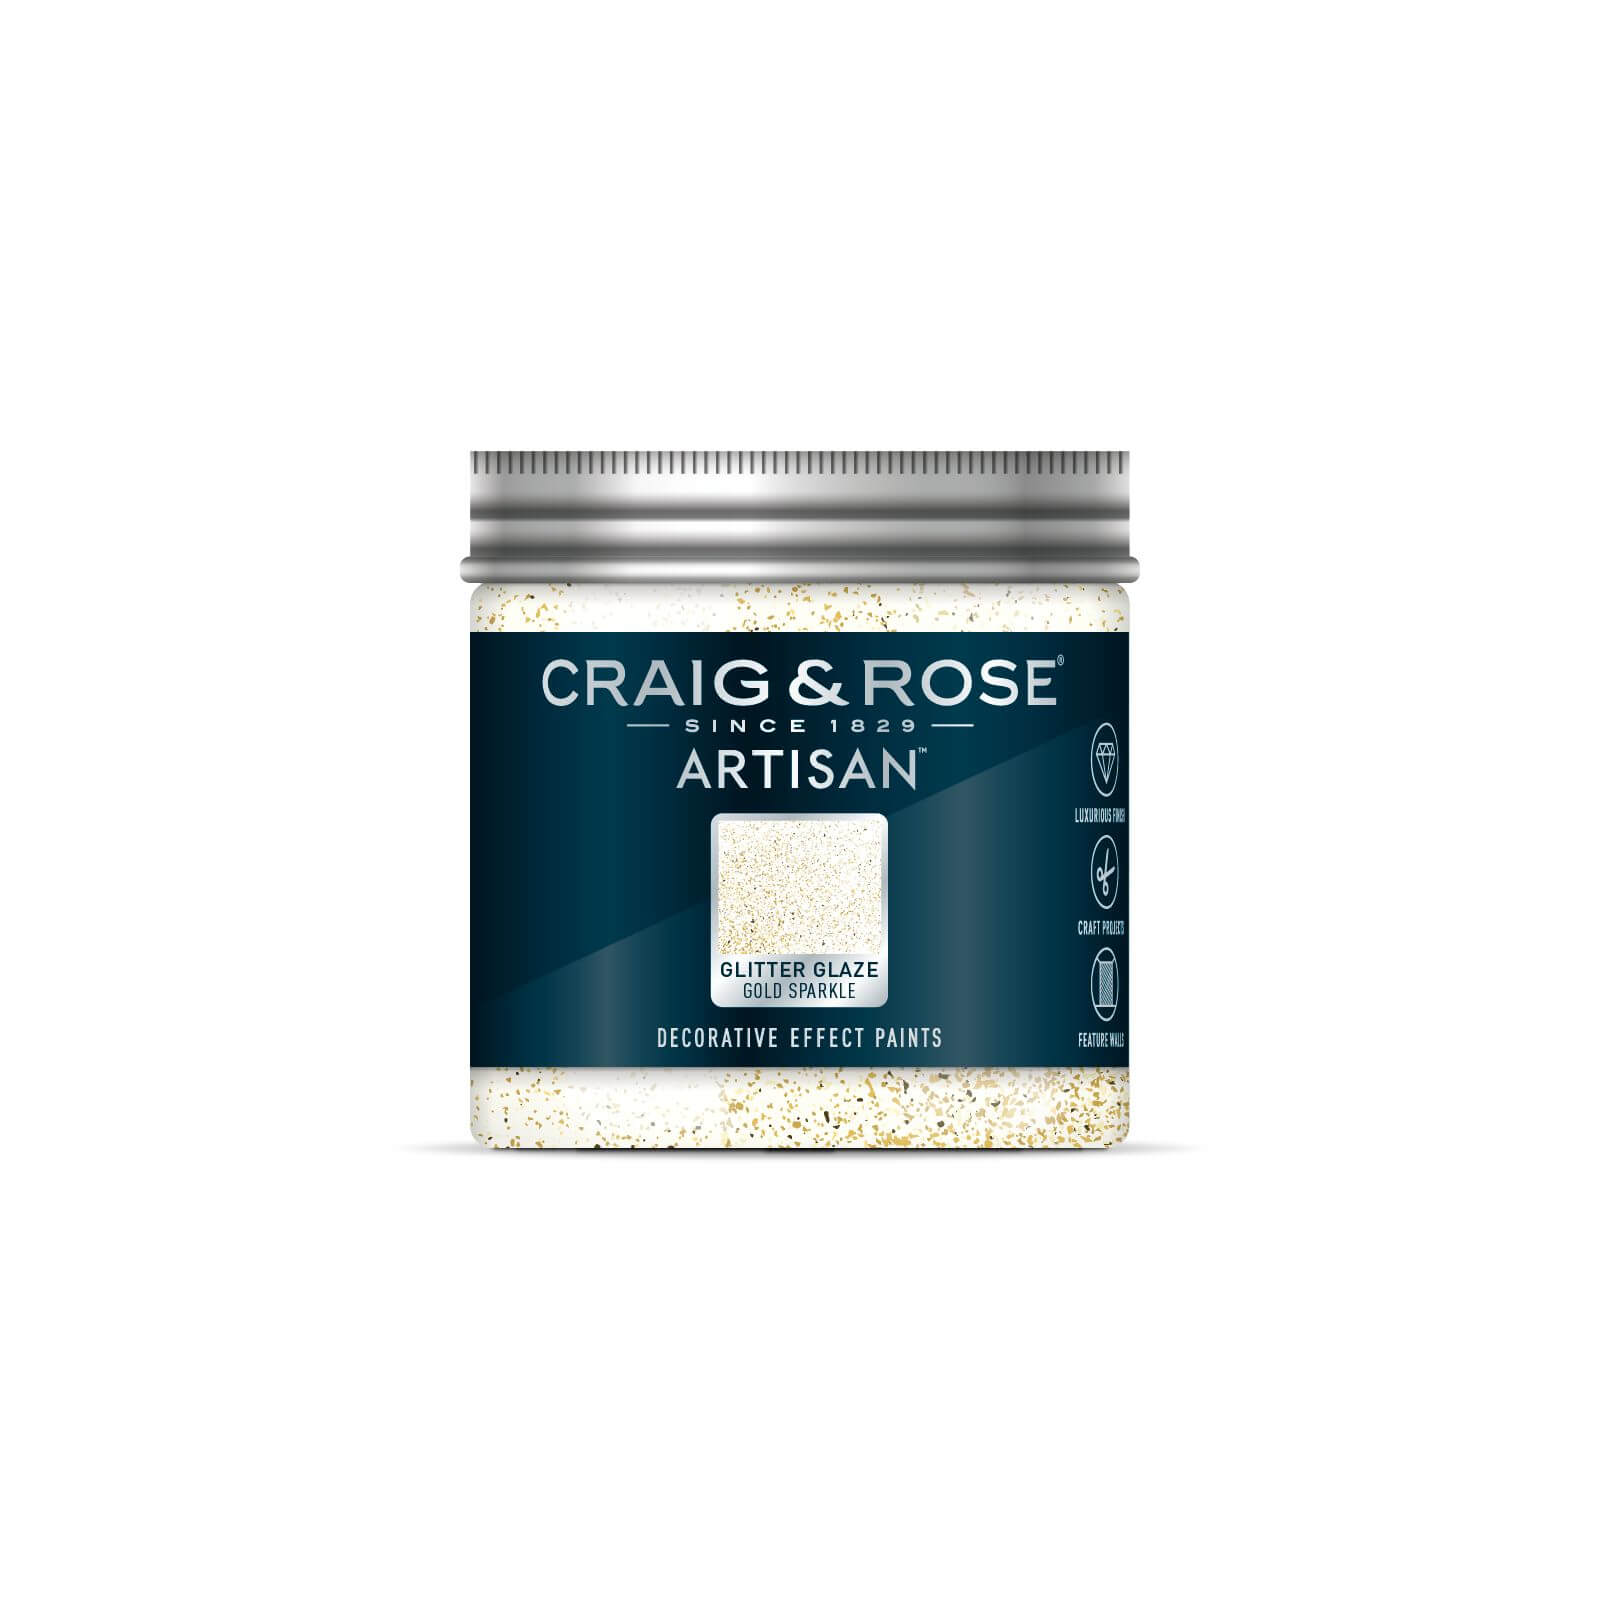 Craig & Rose Artisan Glitter Glaze Paint Gold Sparkle - 100ml